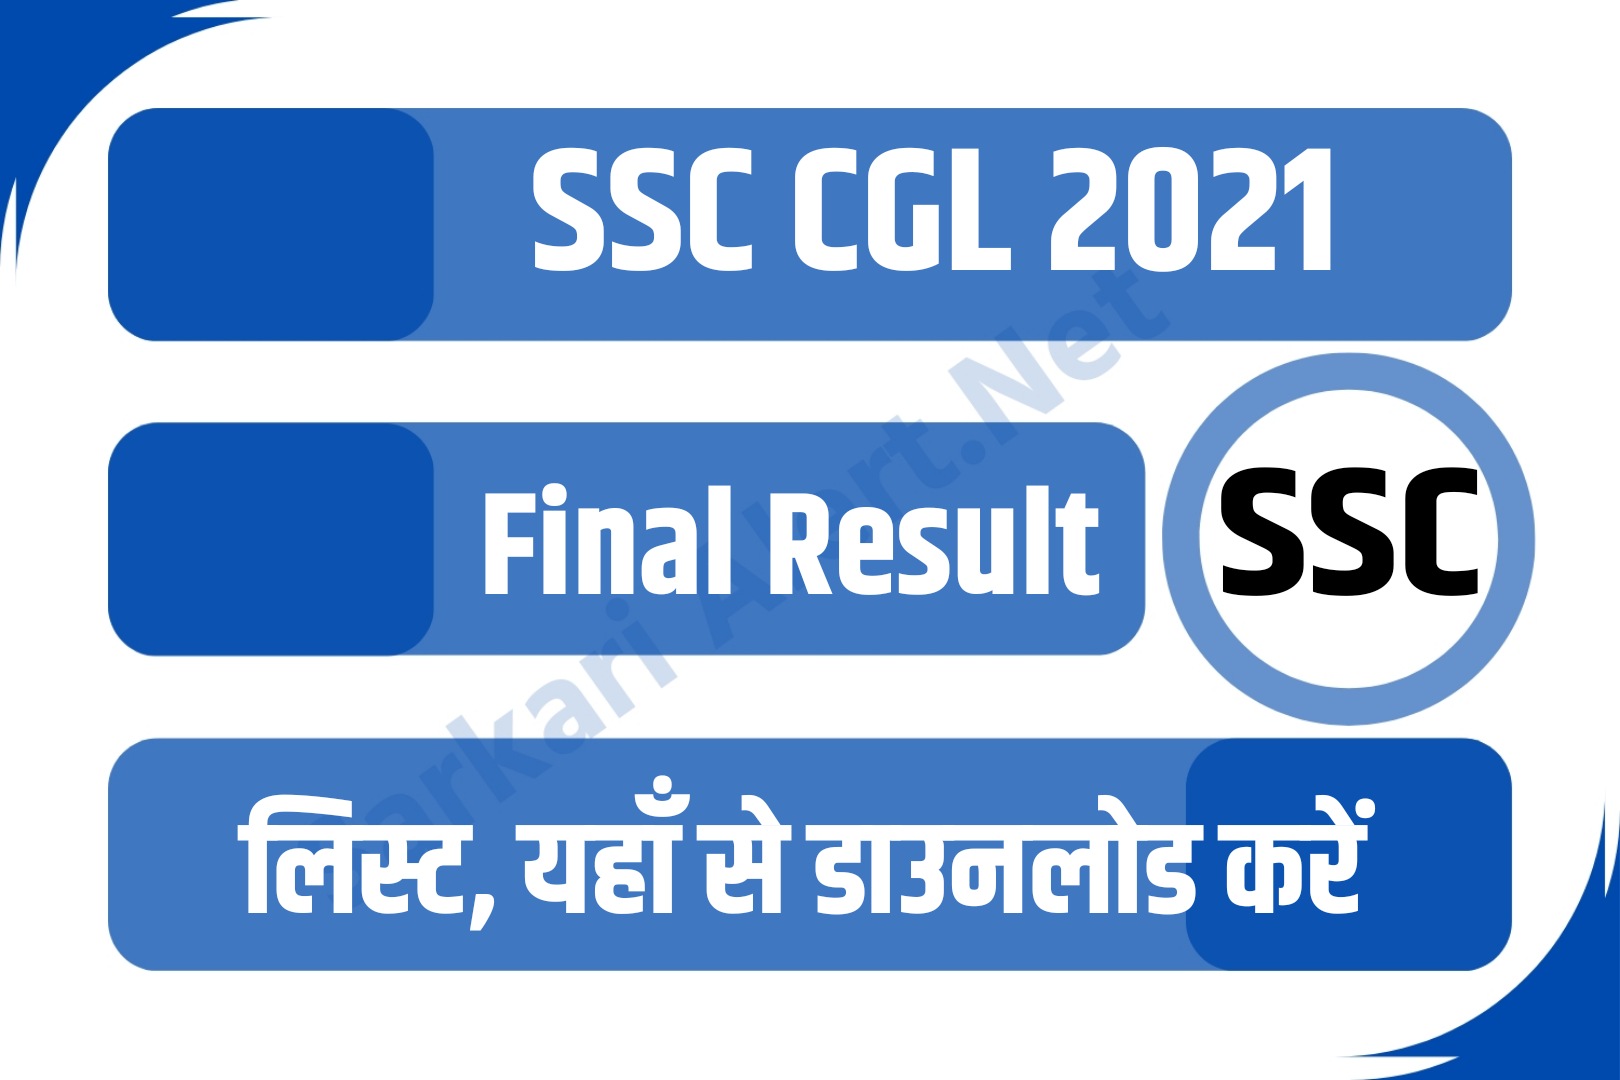 SSC CGL 2021 Final Result